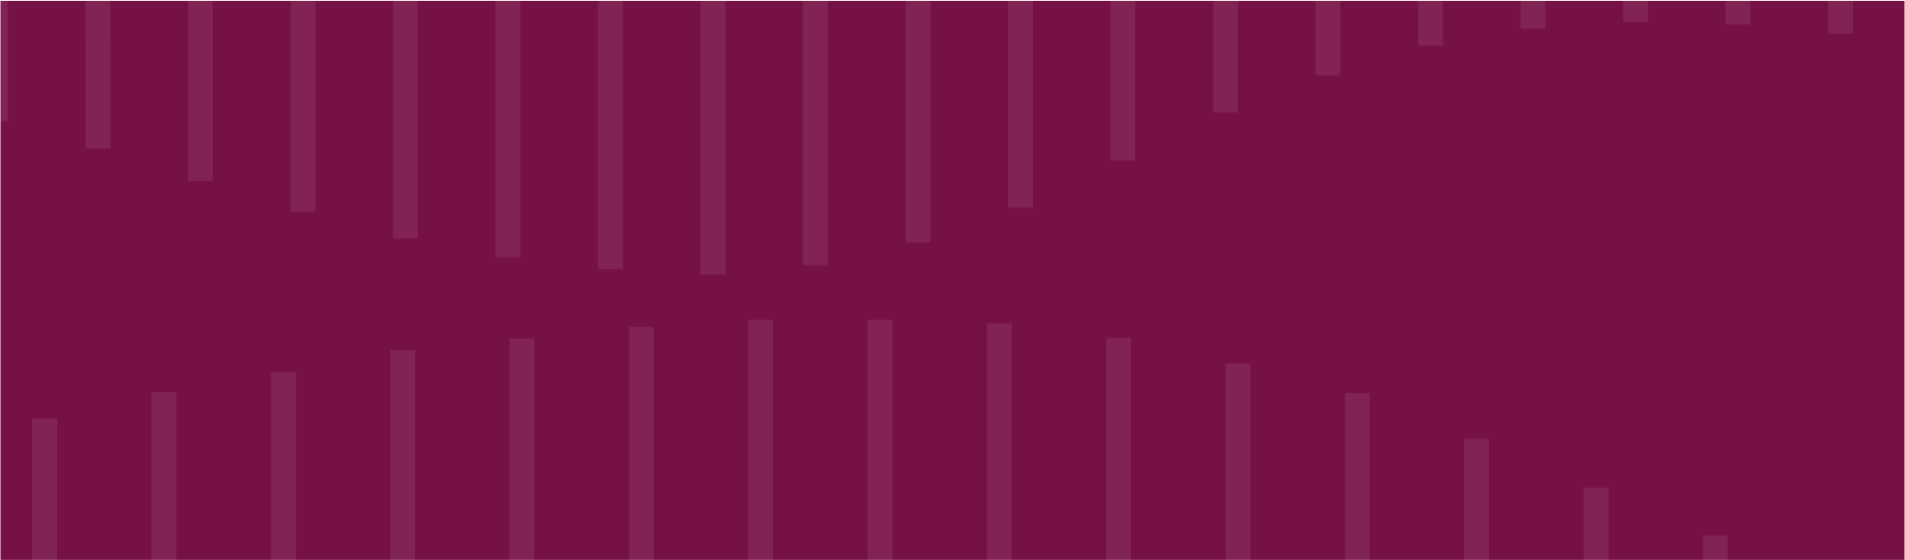 1Qatar Music Academy Banner.png (7.46 KB)